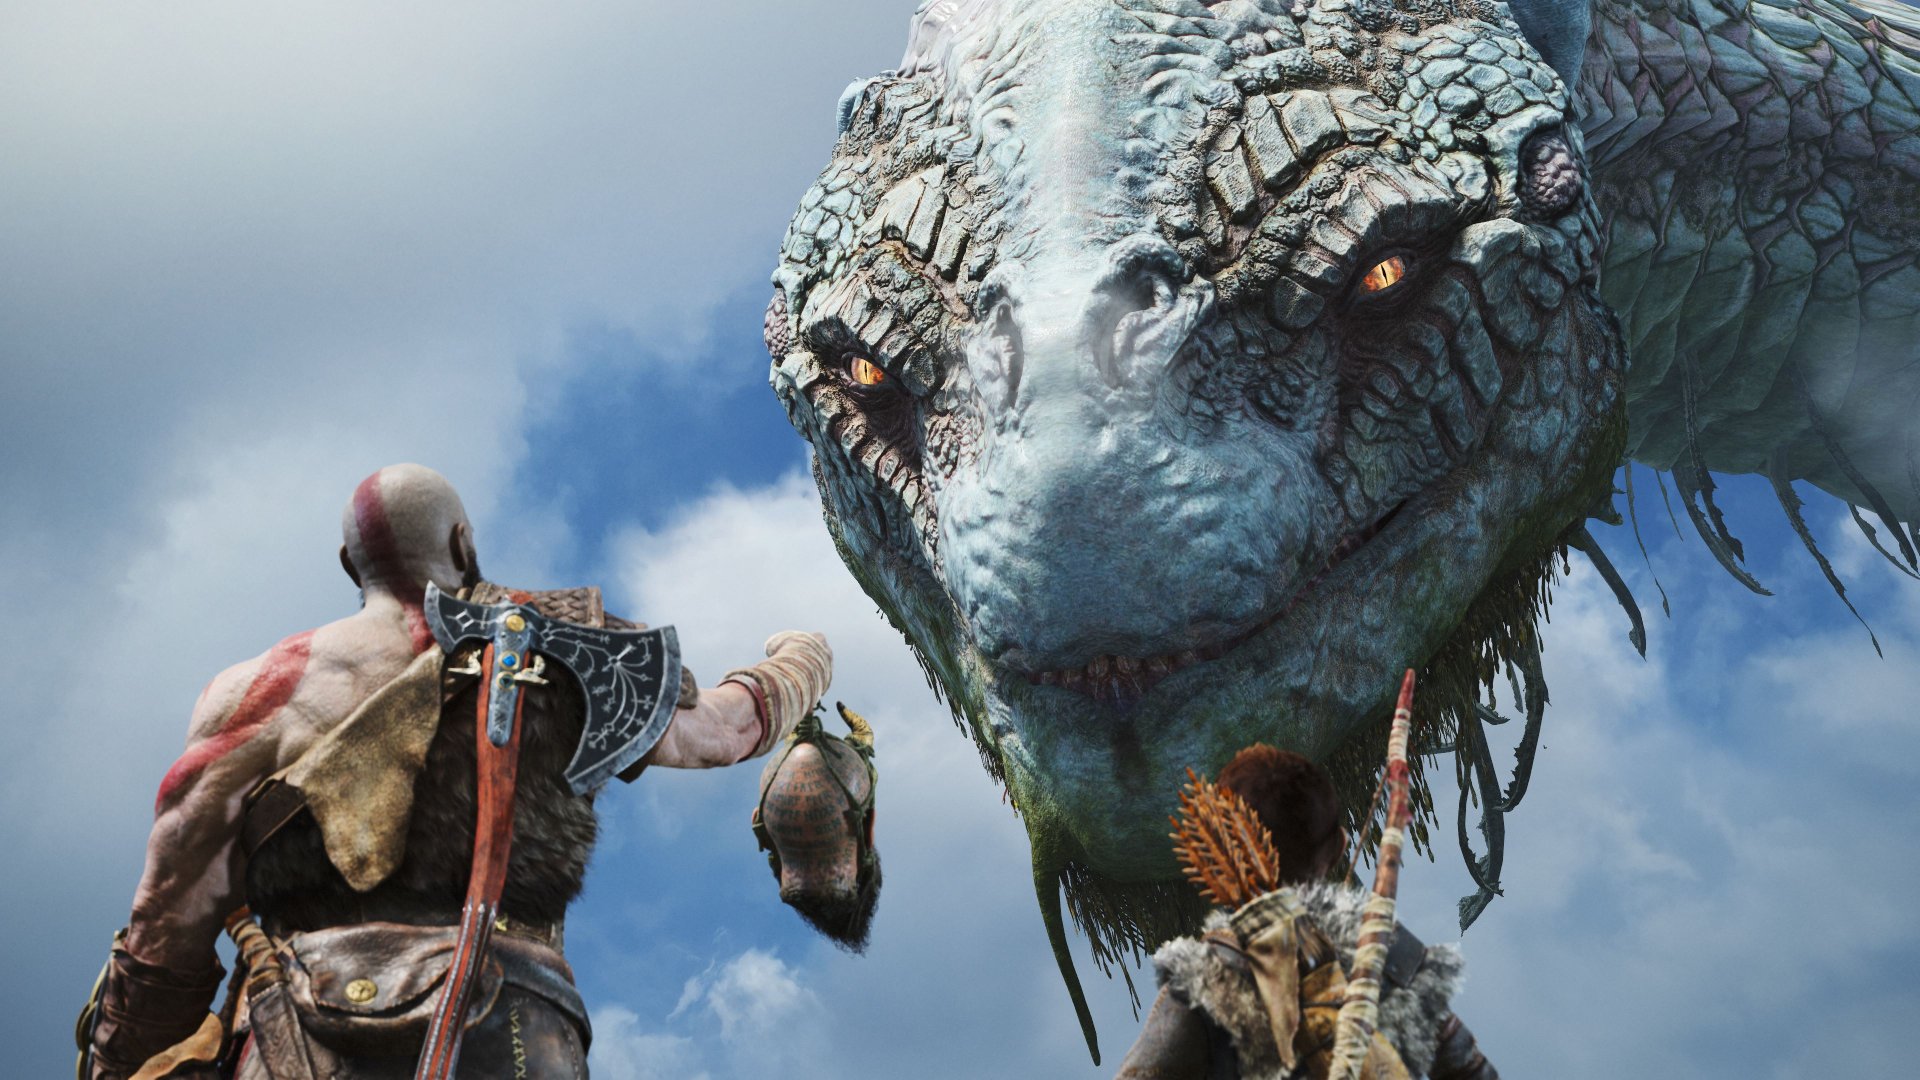 Is God of War Ragnarok worth buying on base PlayStation 4?